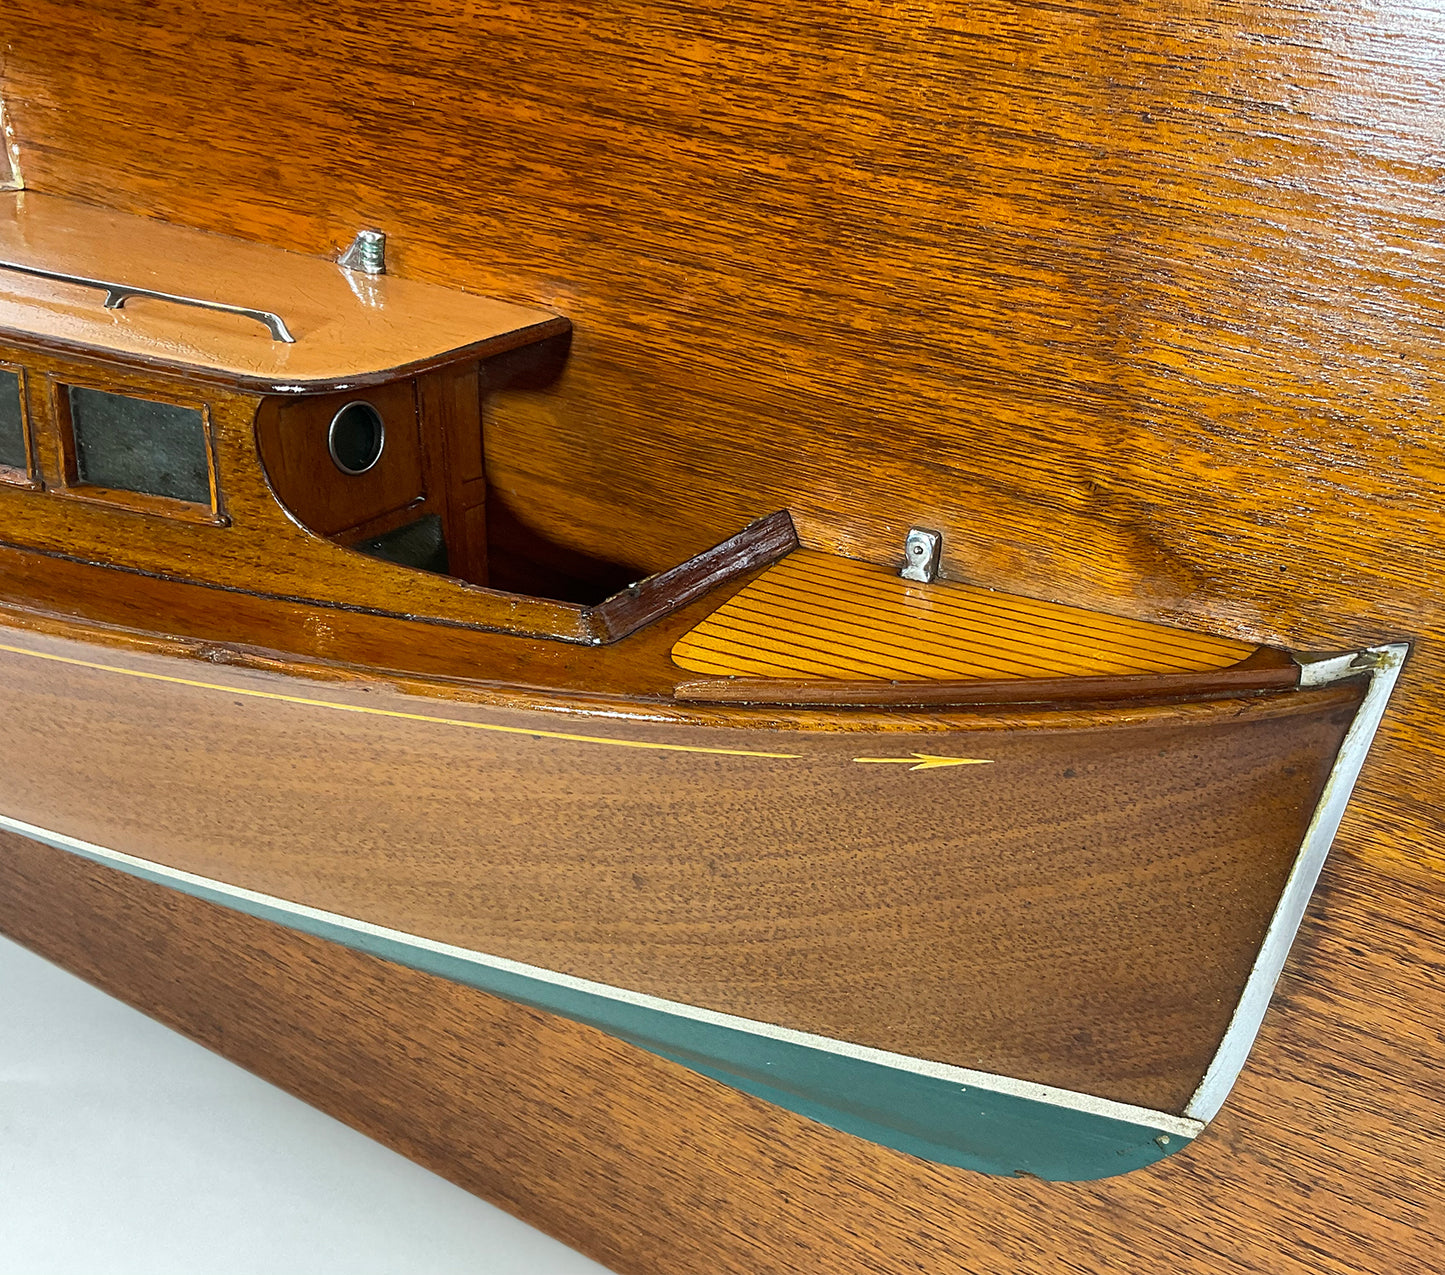 Architect's Half Model Of Wrigley Family Yacht "Wasp" - Lannan Gallery